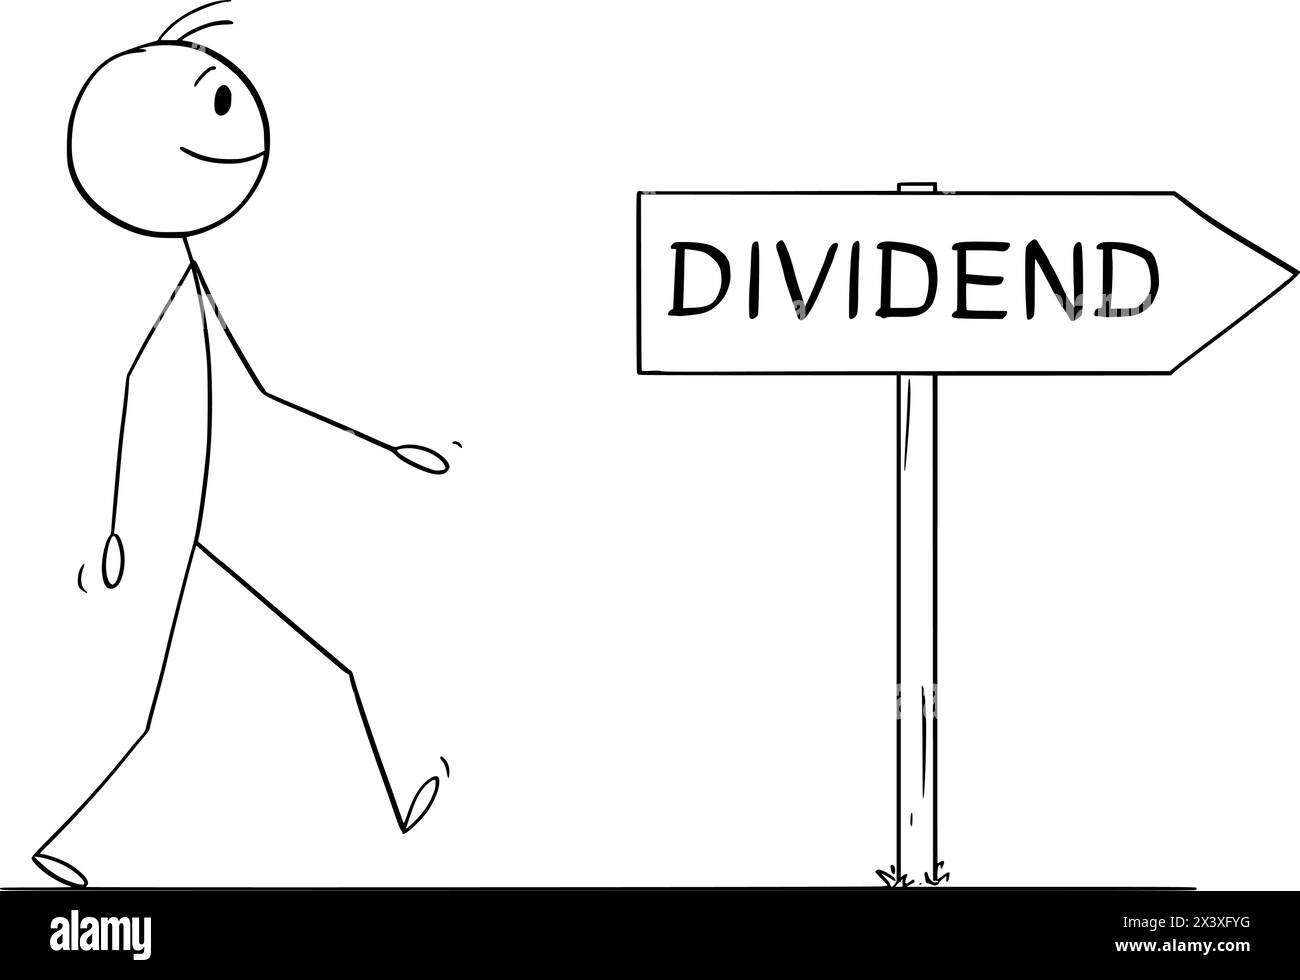 Investor Goes for Dividend, Vector Cartoon Stick Figure Illustration Stock Vector